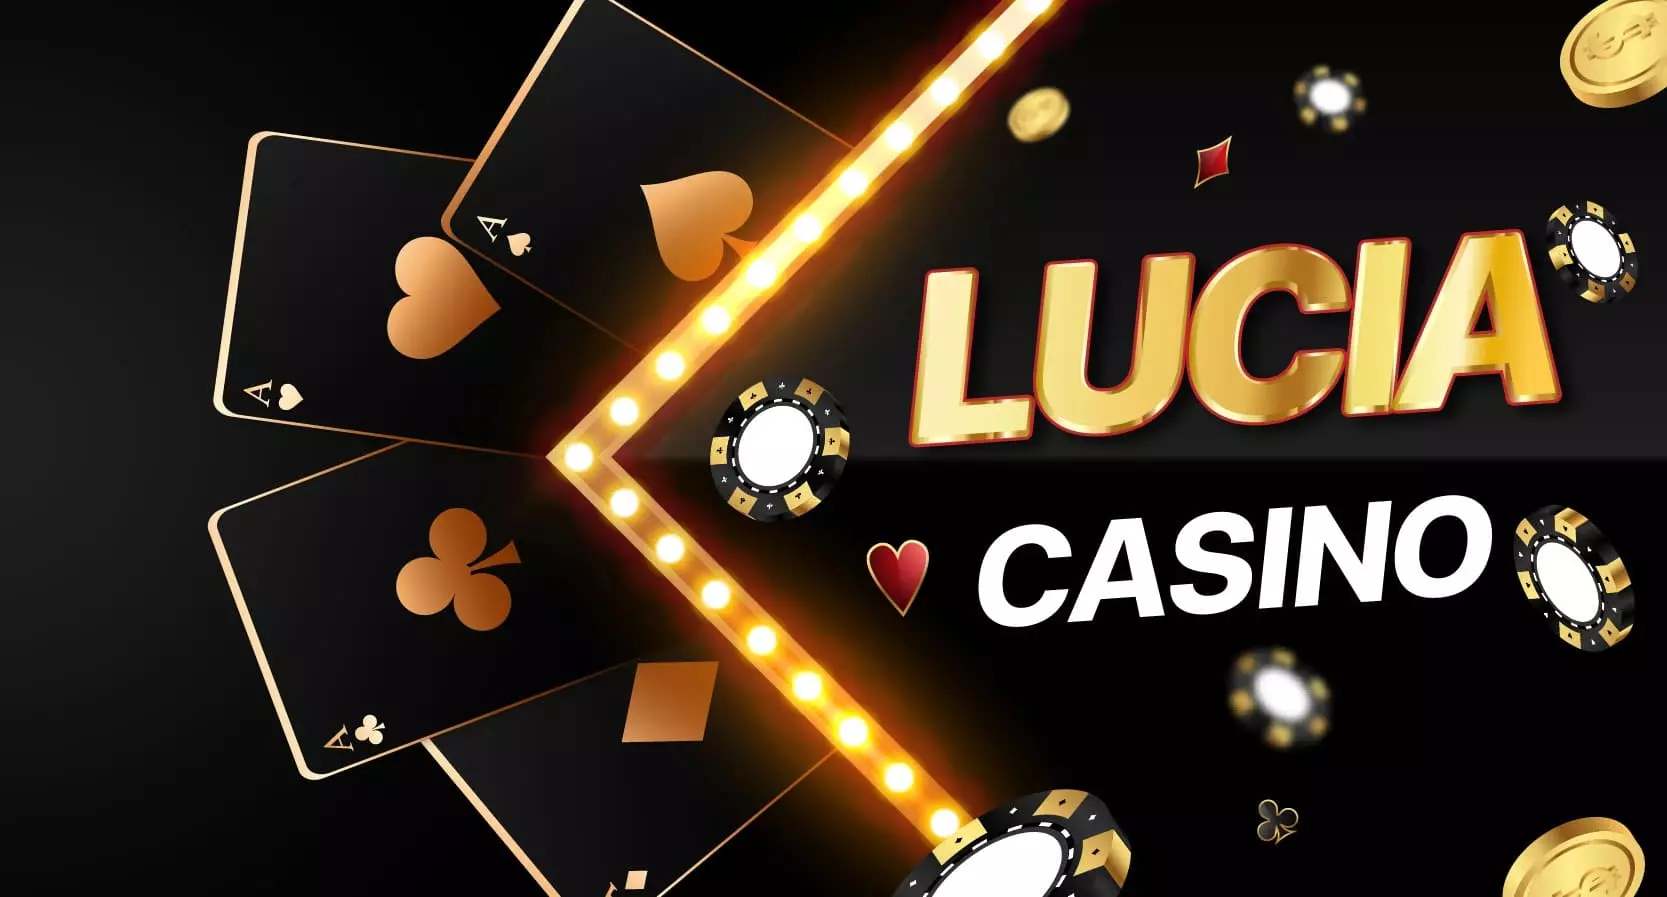 lucia casino เว็บเดิมรูปแบบใหม่ ปรับเกมแตก แจกโบนัส100%